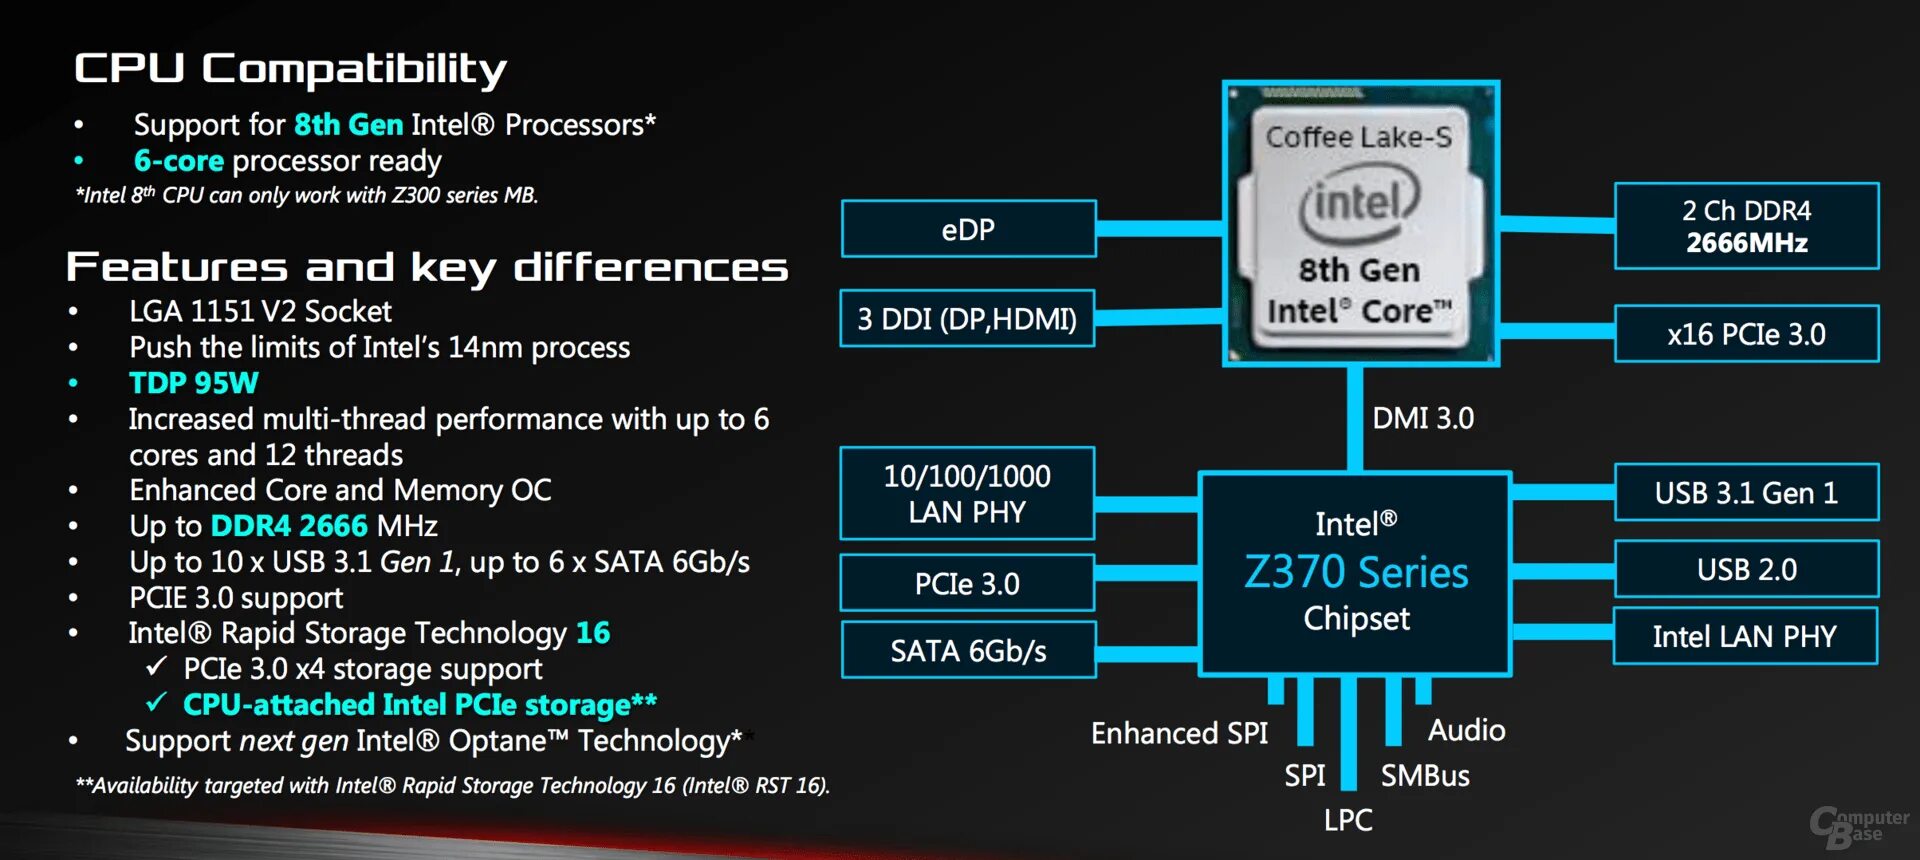 Intel Coffee Lake-s IMC. Архитектура Intel i7 8700. Intel DMI 4.0. Processor 8th Gen Intel. 7 series chipset